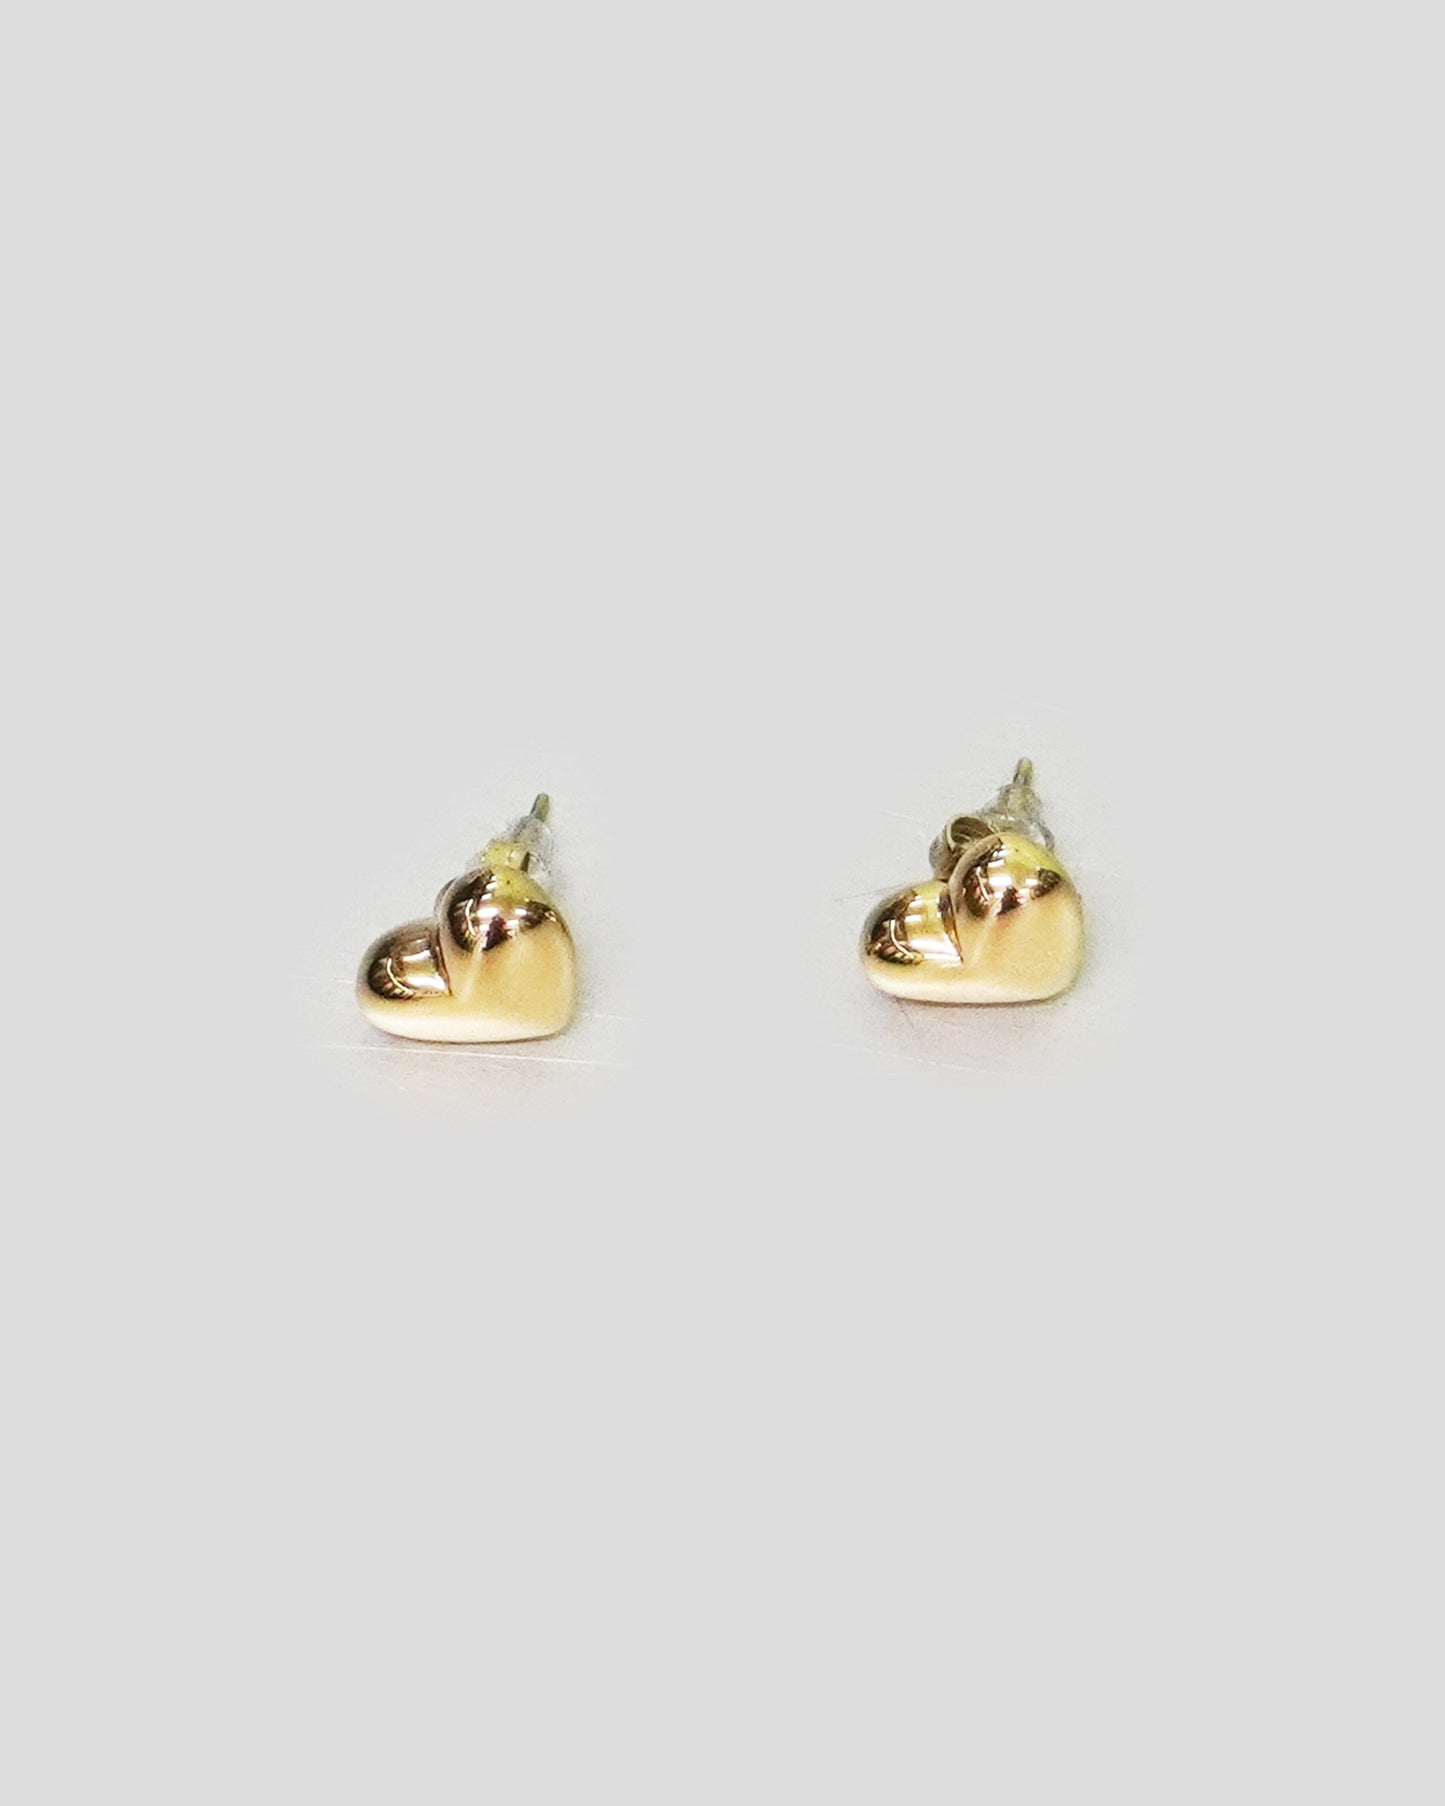 Marland Backus - Pair of Gold Heart Earrings